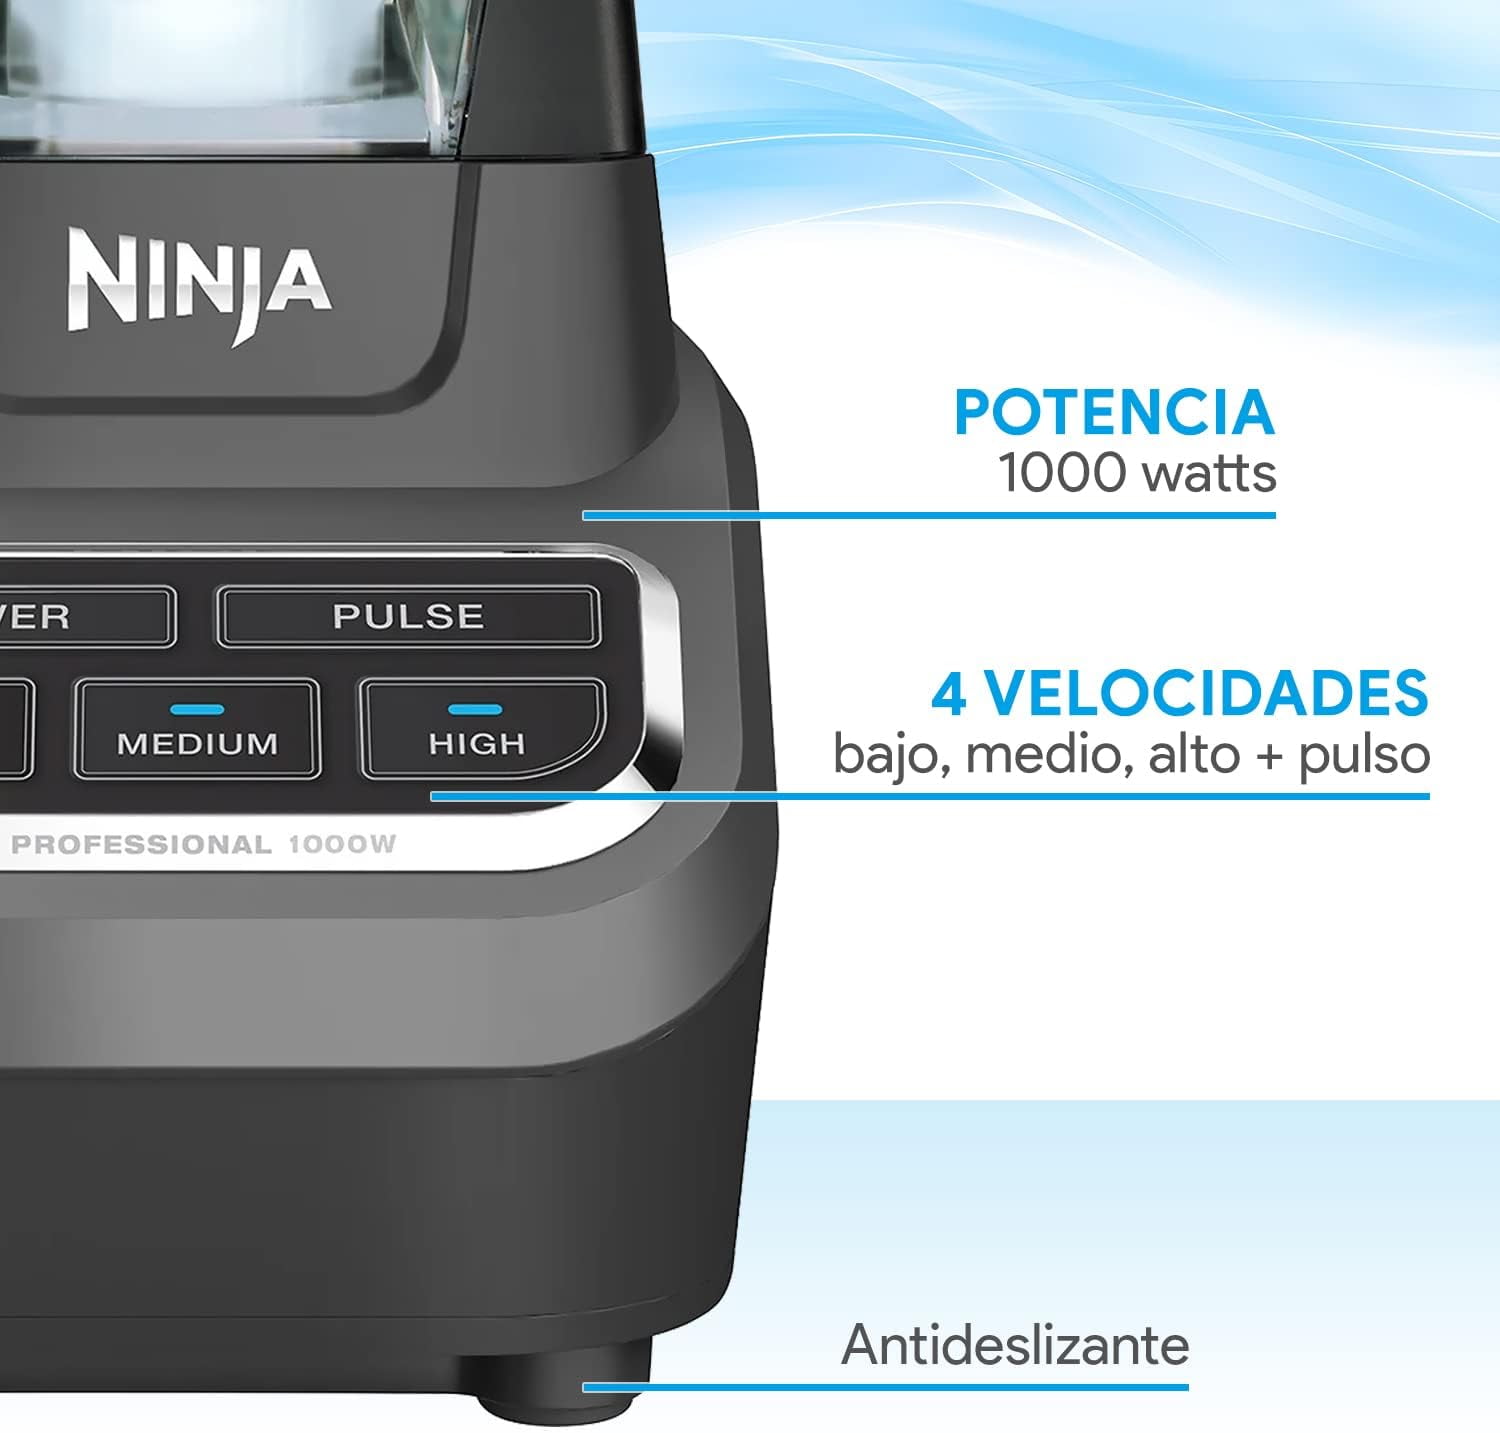 Ninja CO610B 1000W Professional Blender - Black for sale online